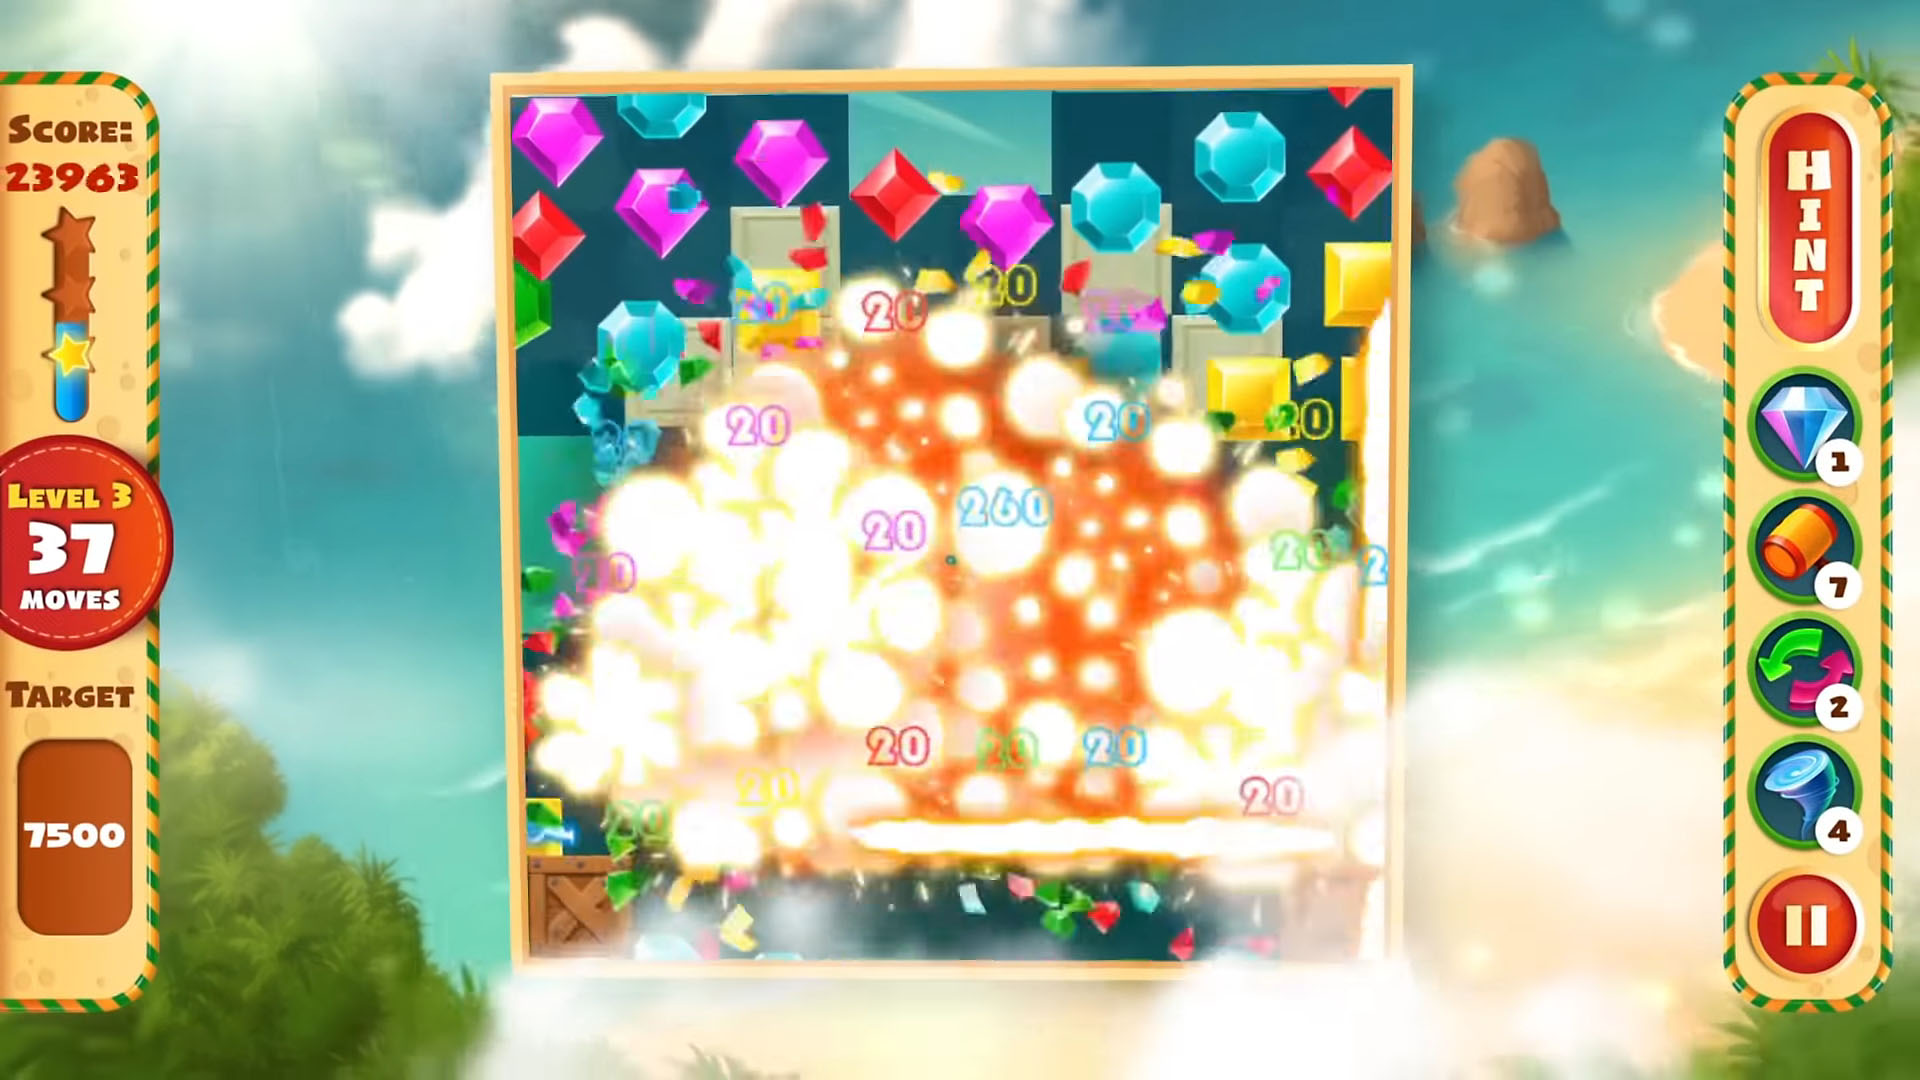 Jewel Empire : Quest & Match 3 Puzzle スクリーンショット1